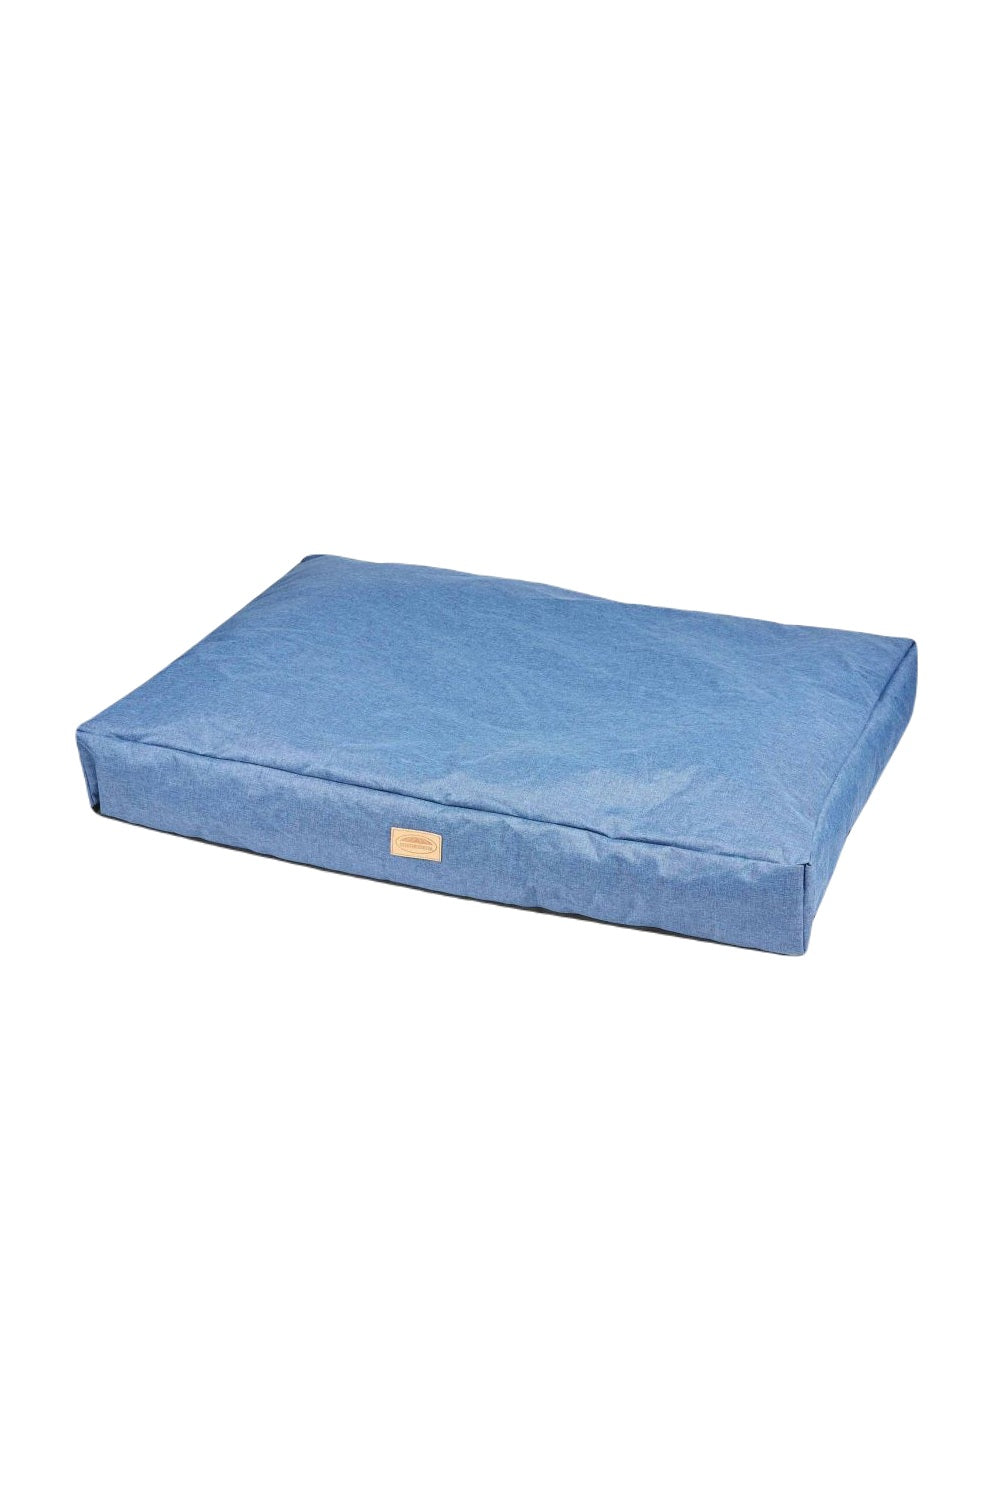 WeatherBeeta Pillow Denim Dog Bed In Blue Denim